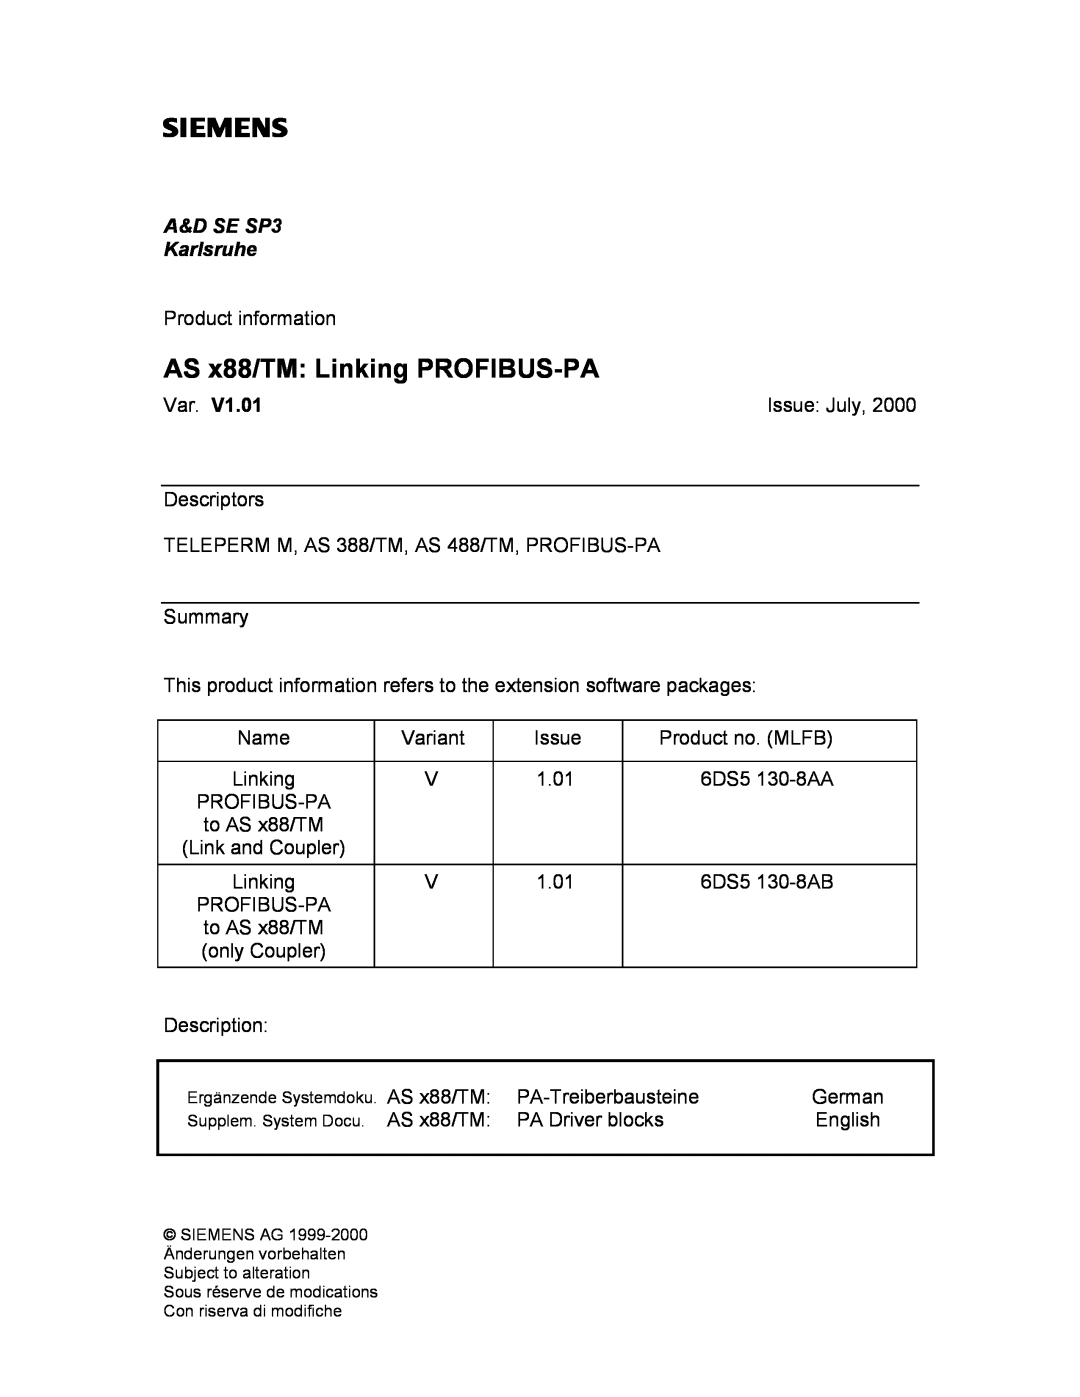 Fujitsu Siemens Computers manual AS x88/TM Linking PROFIBUS-PA, A&D SE SP3 Karlsruhe 